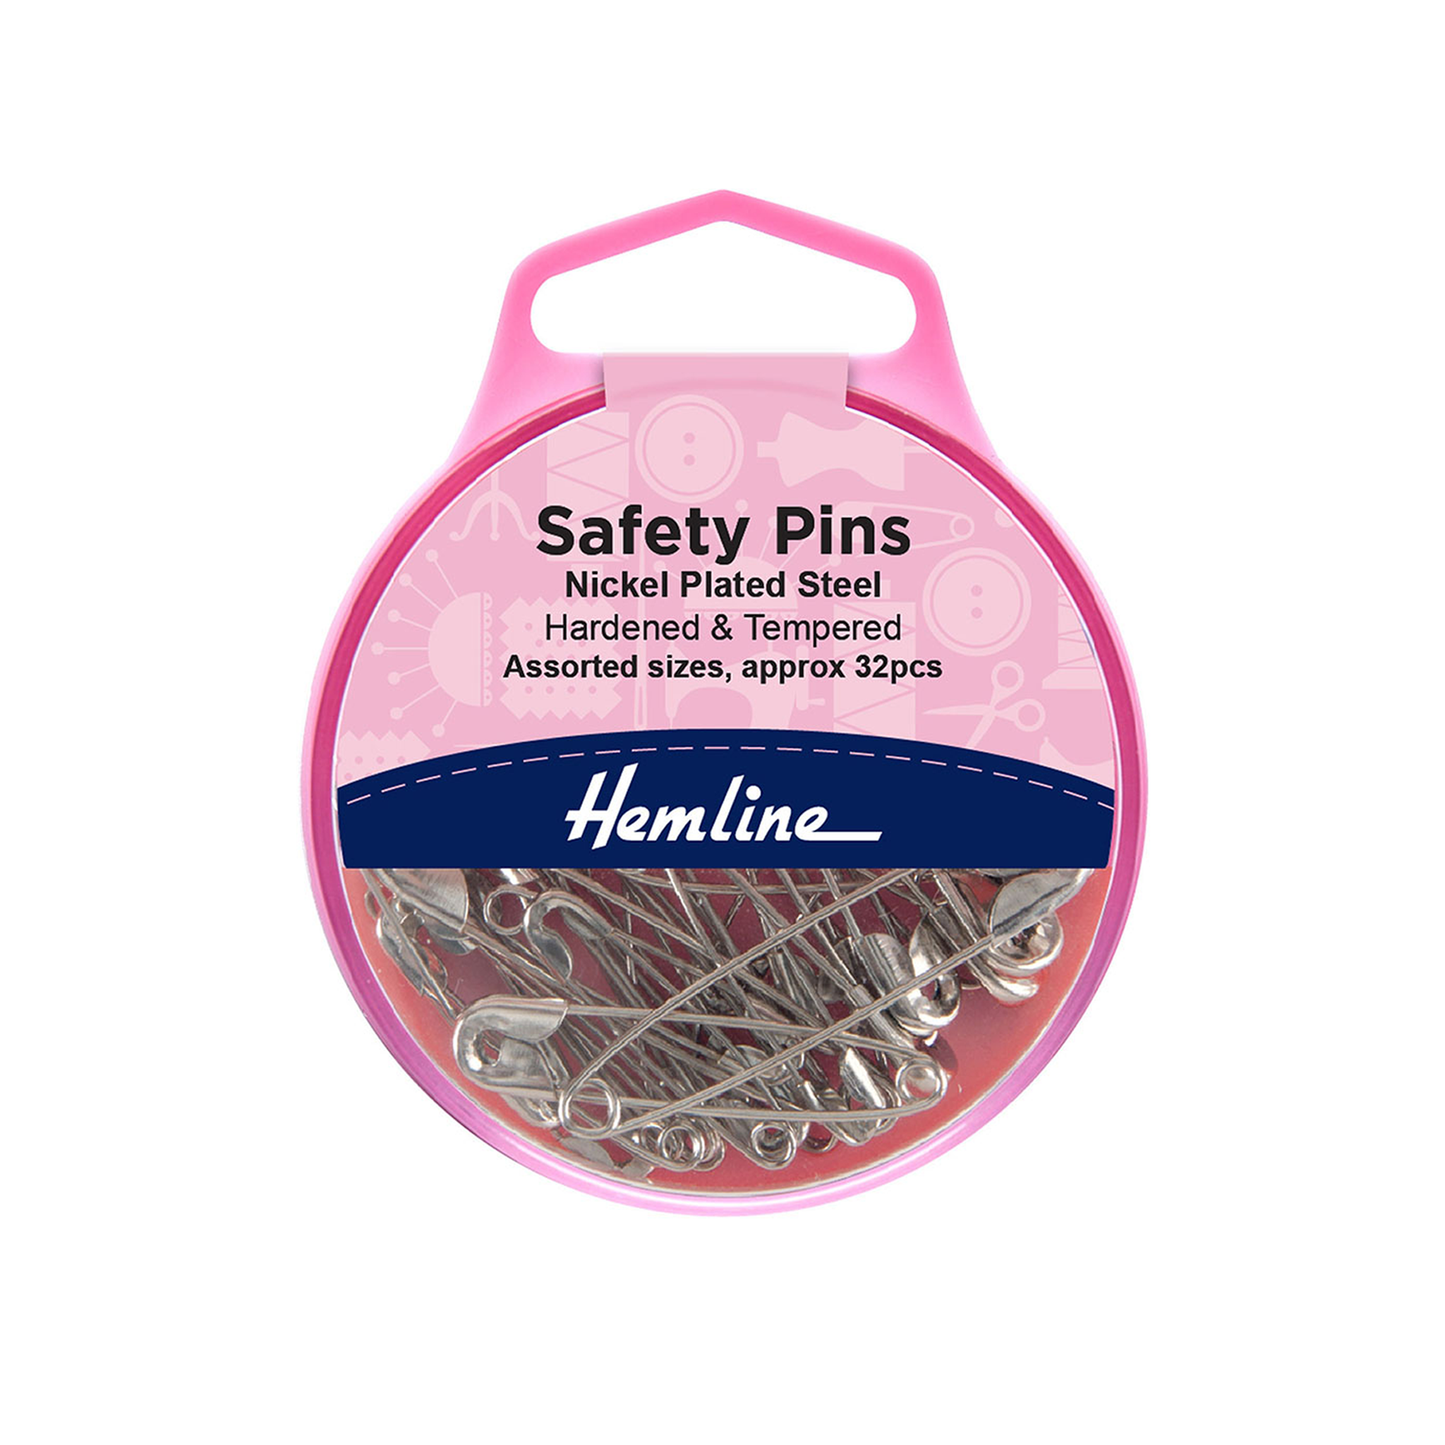 Hemline Safety Pins Assorted 32pcs